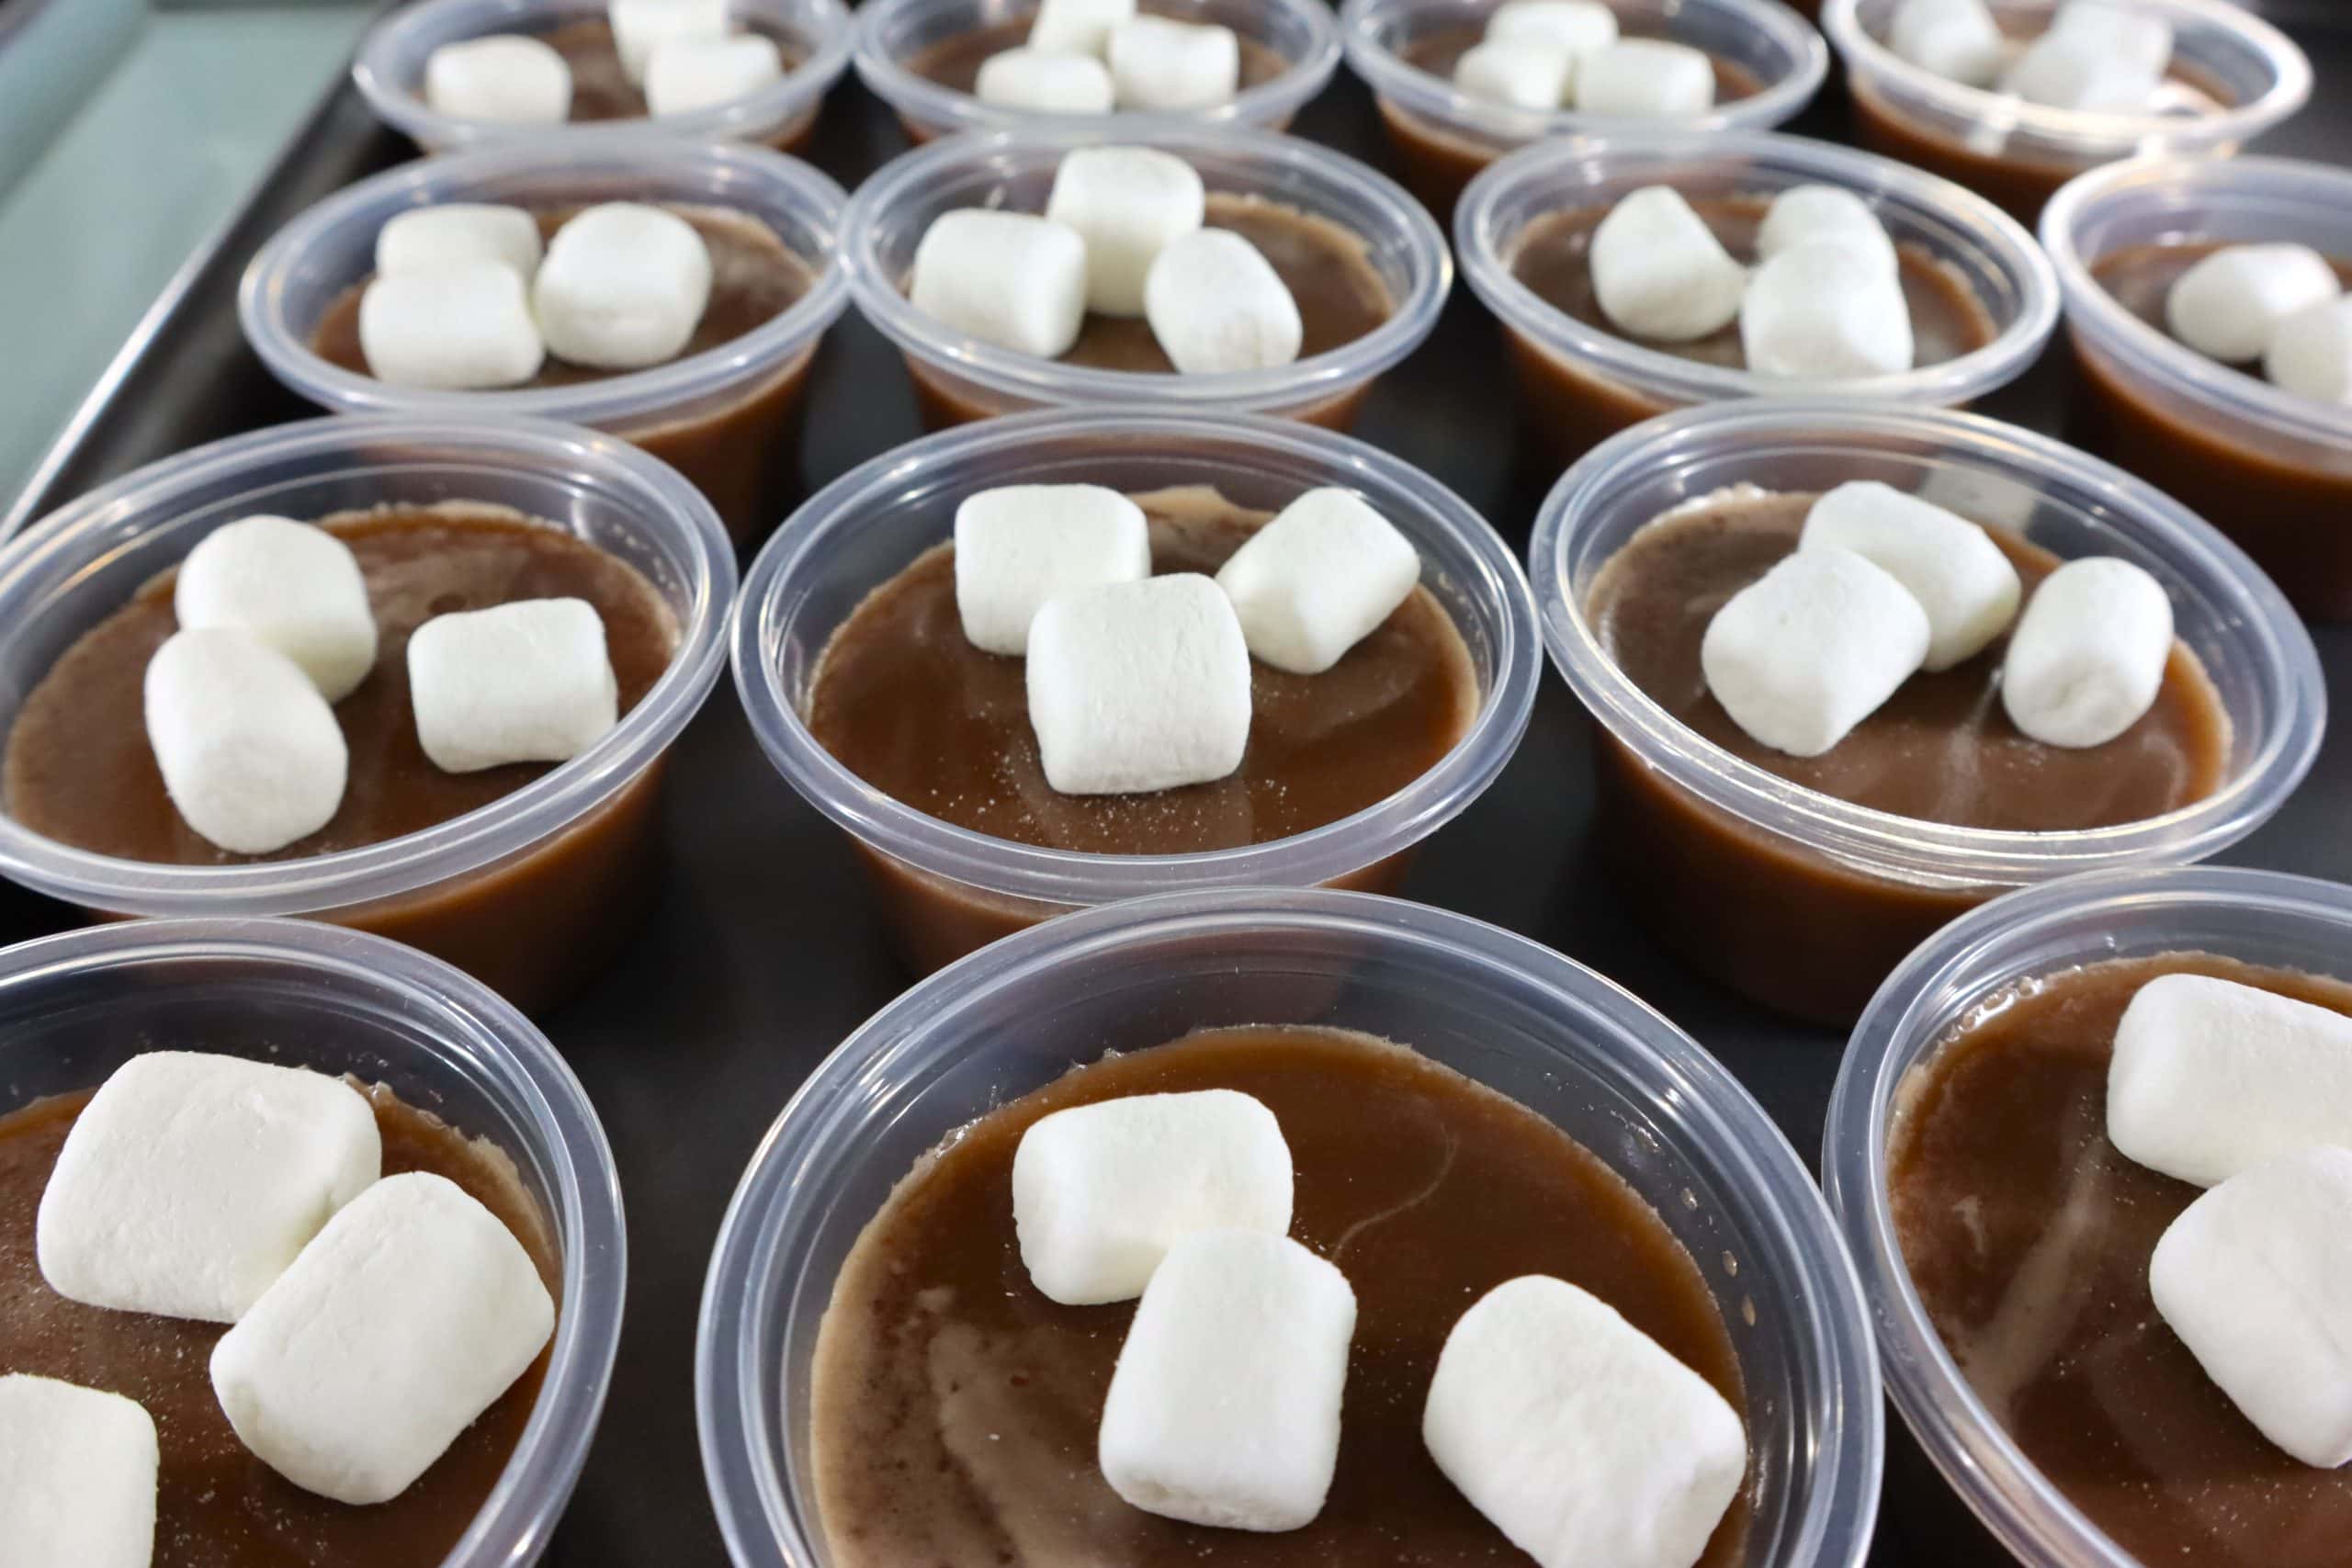 A tray of hot chocolate jello shots topped with mini marshmallows.